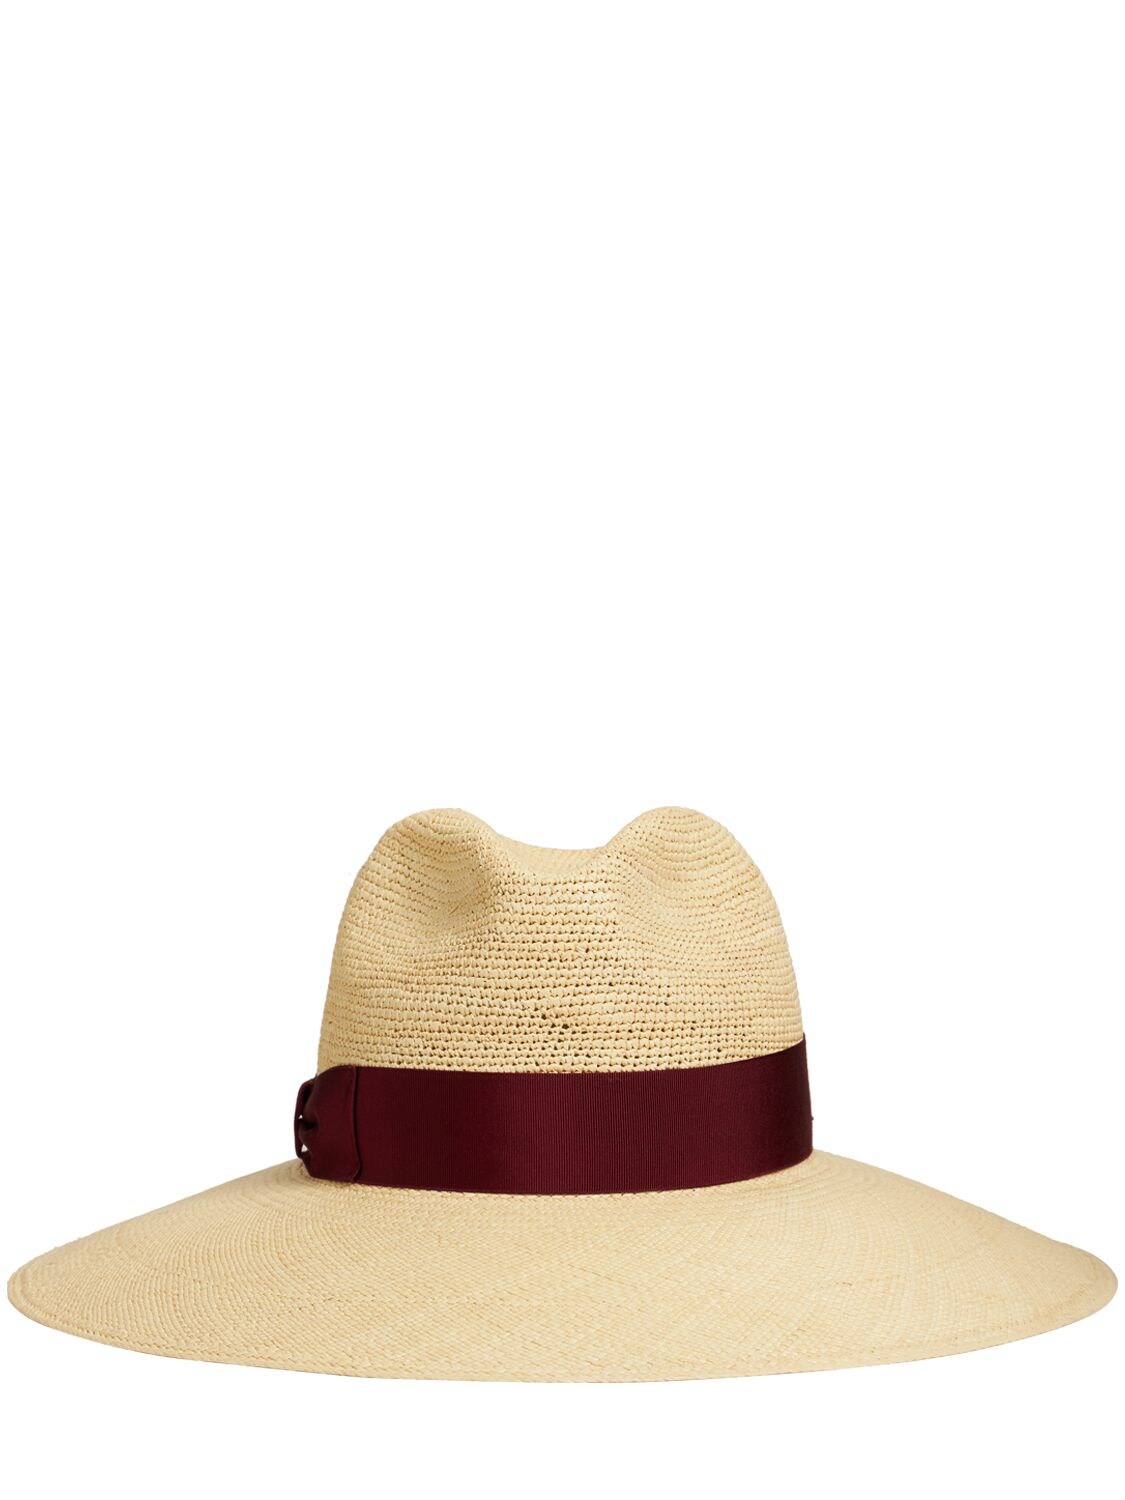 BORSALINO Sophie Crocheted & Woven Straw Hat